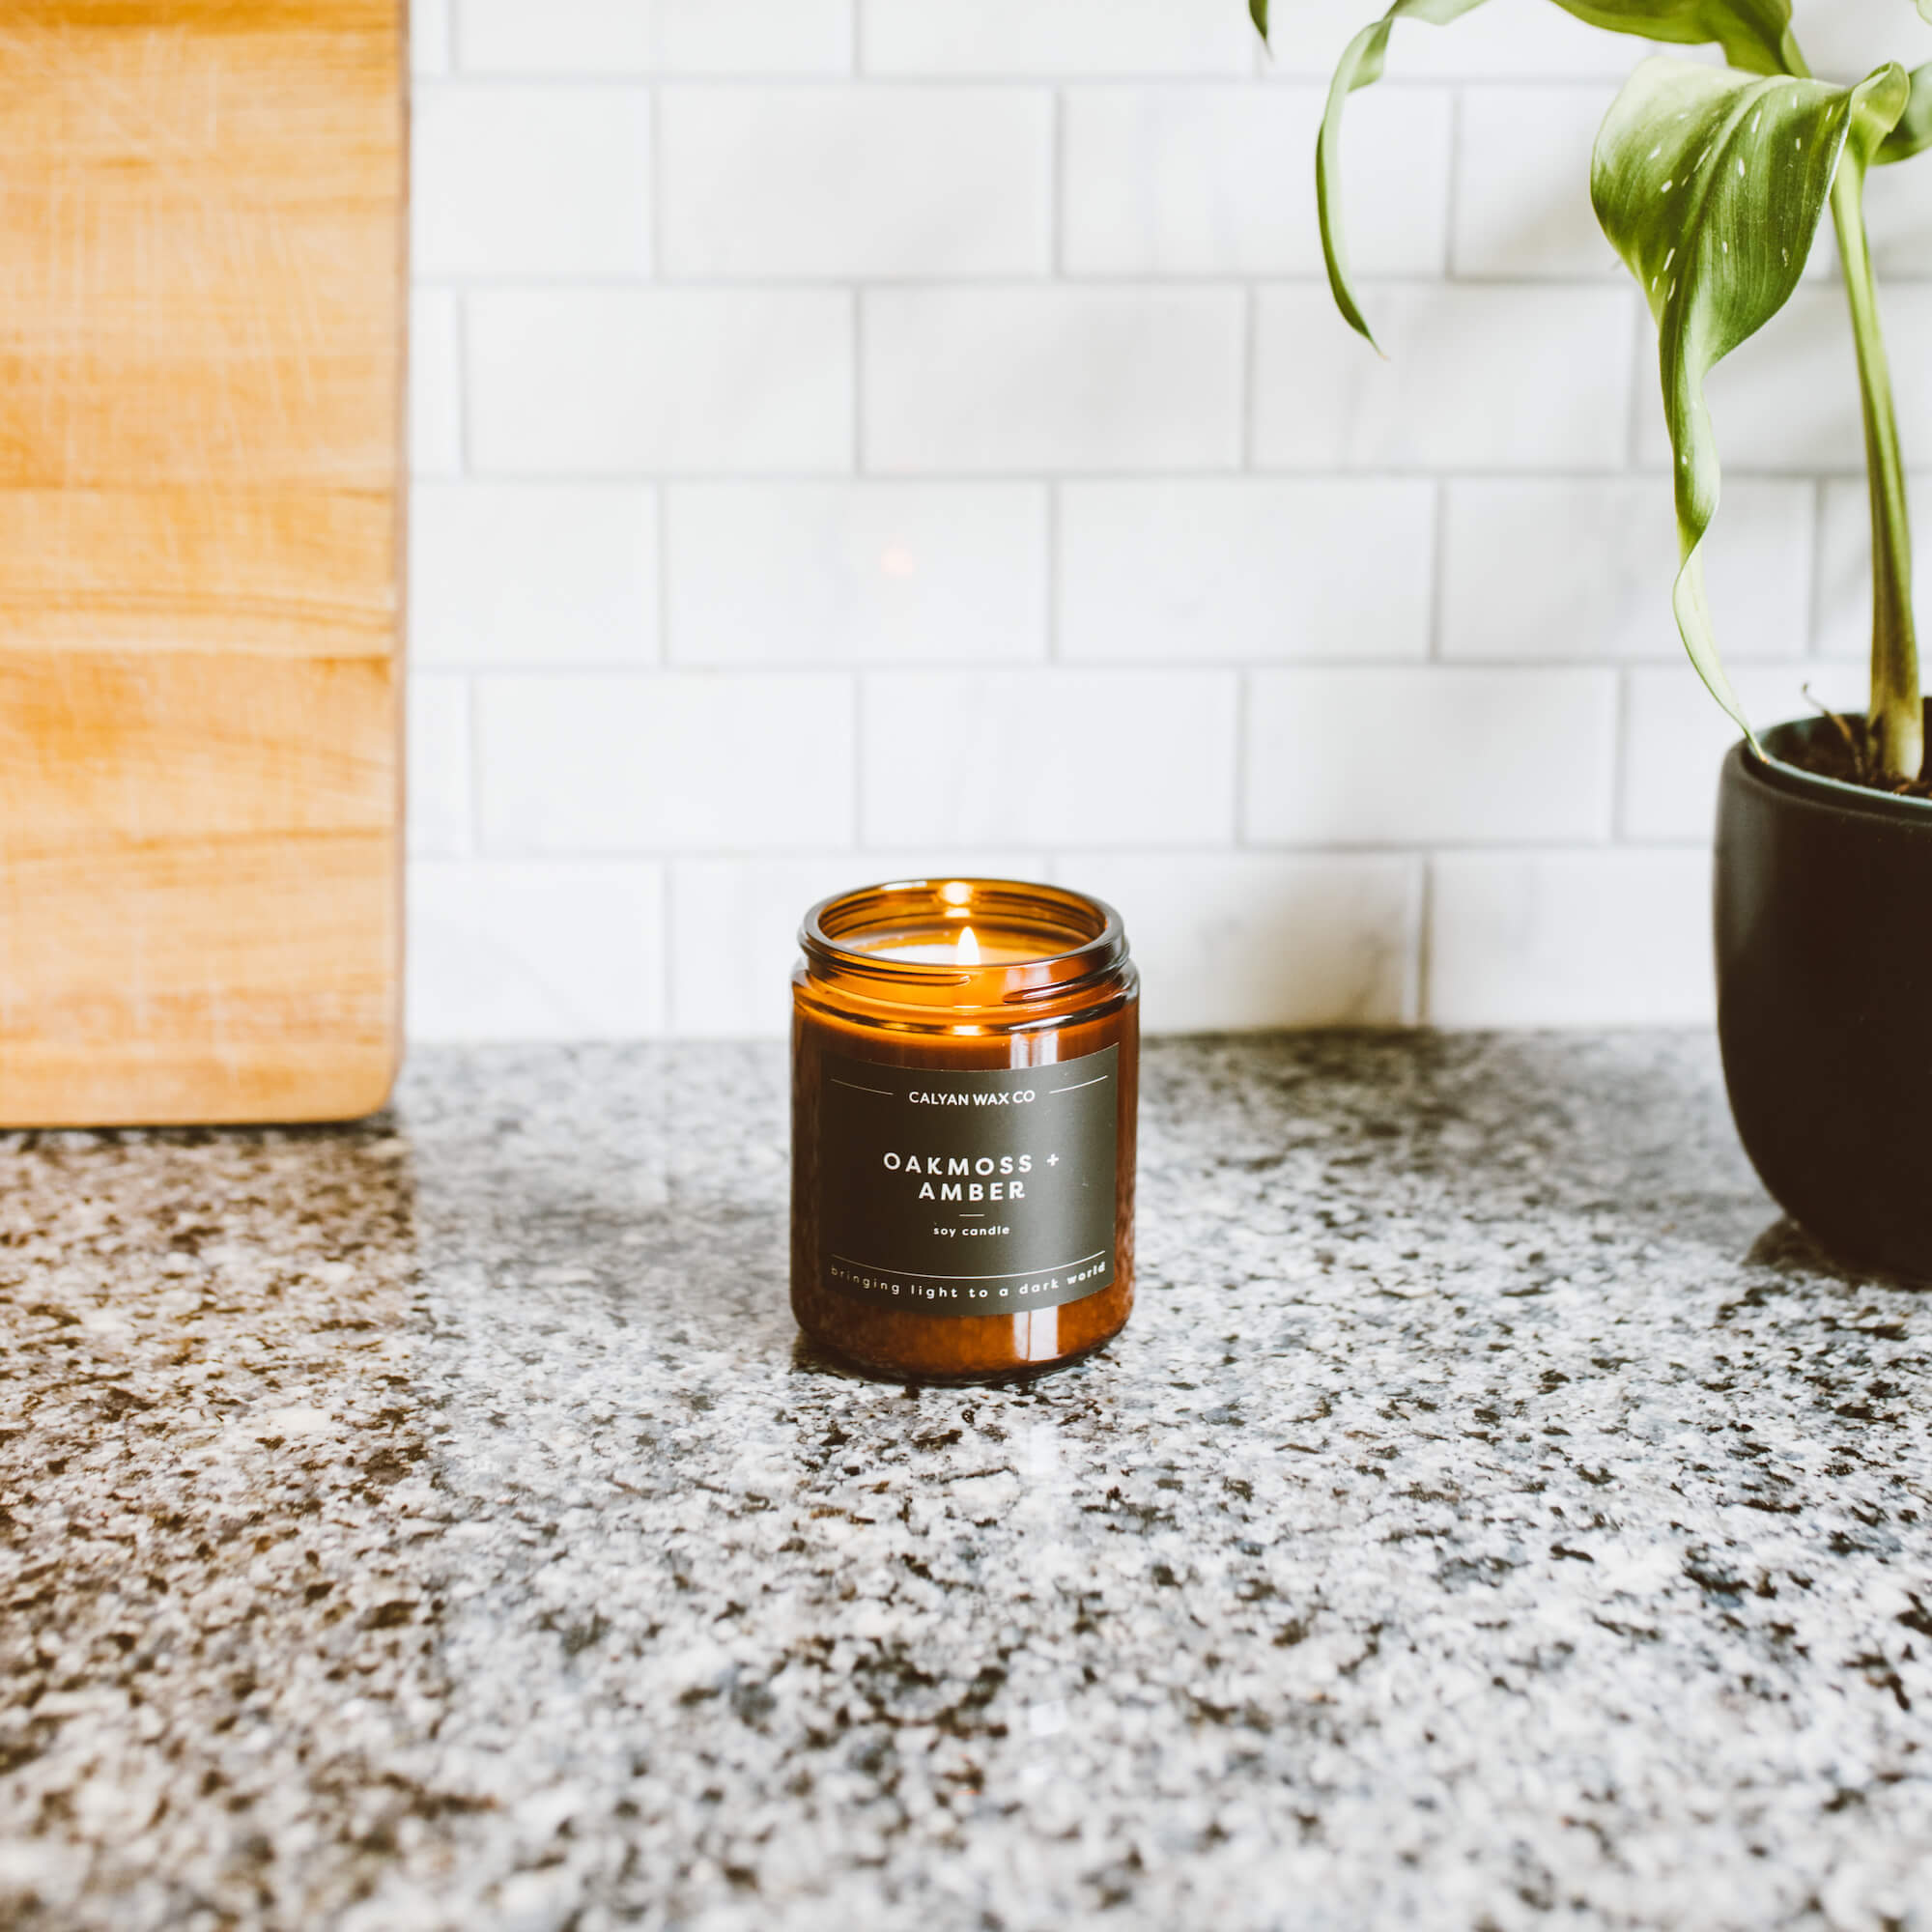 7.2 Oz. Redwood + Vanilla Soy Candle in an Amber Jar - Calyan Wax Co.